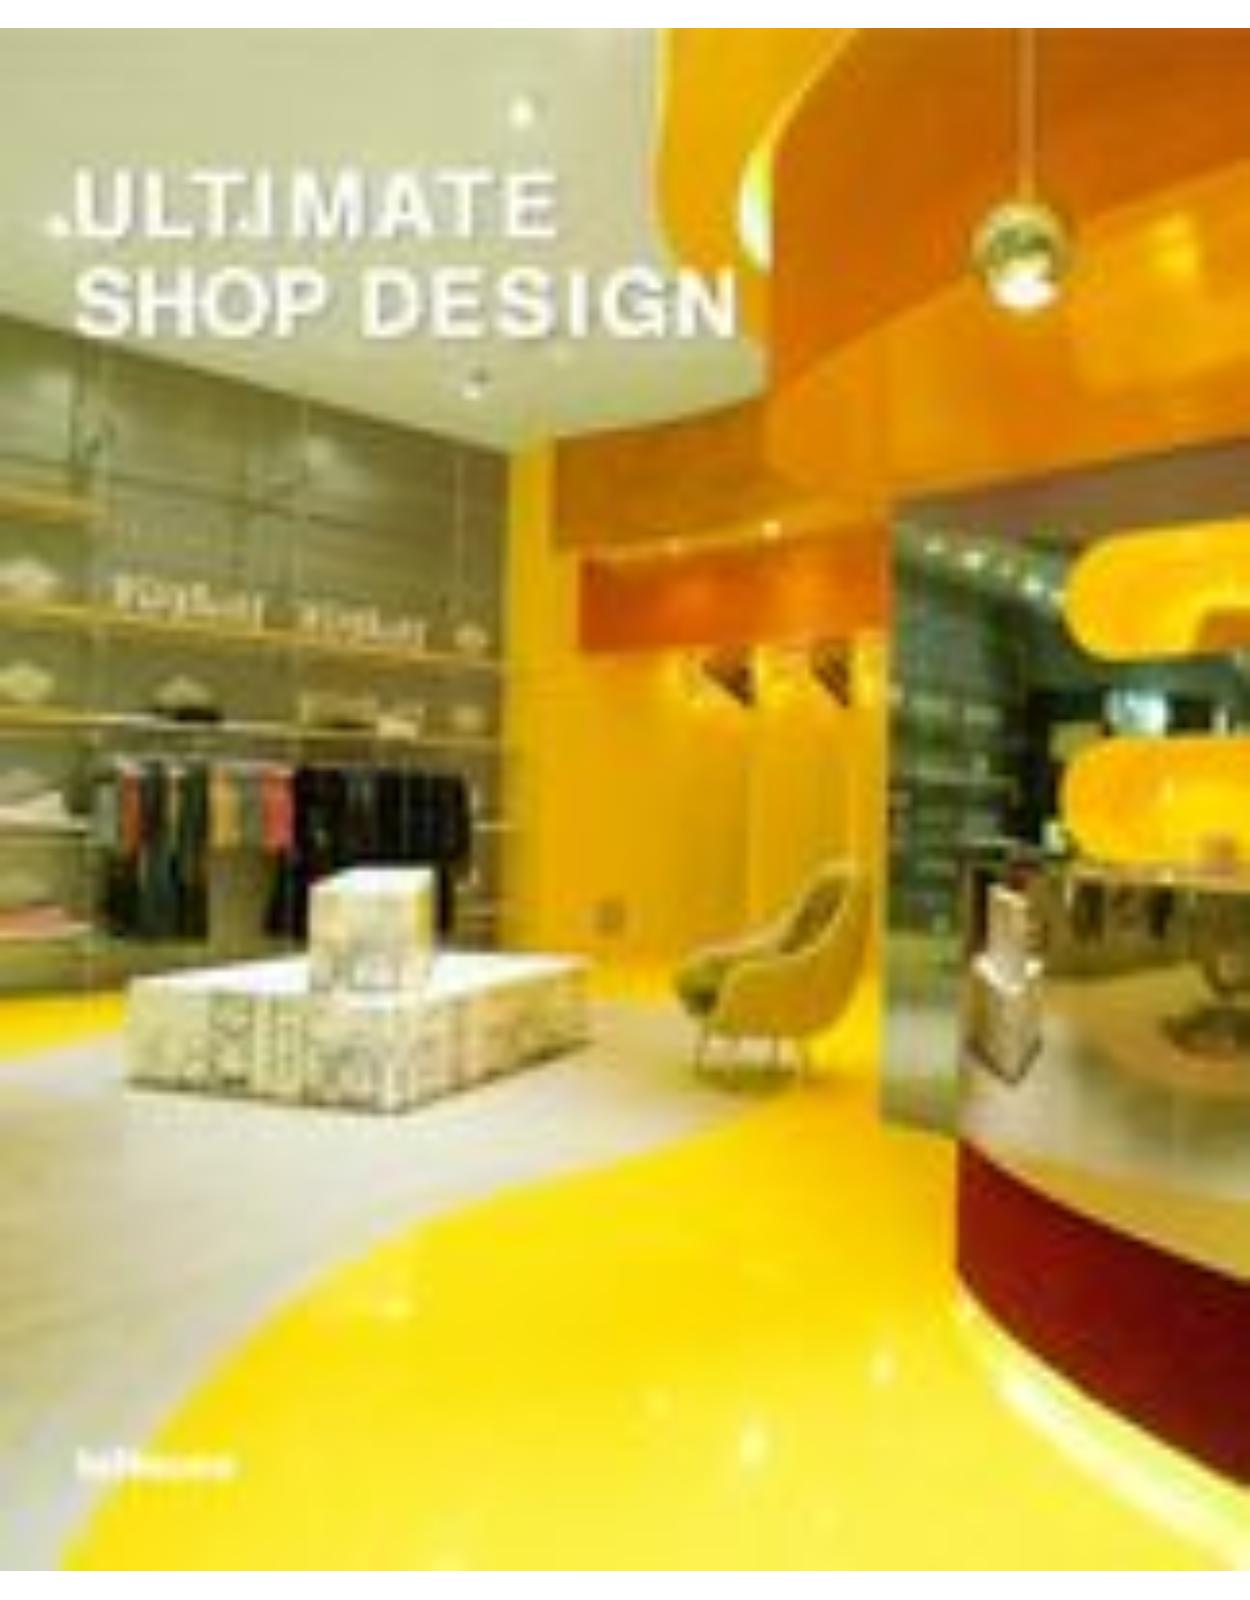 Ultimate Shop Design